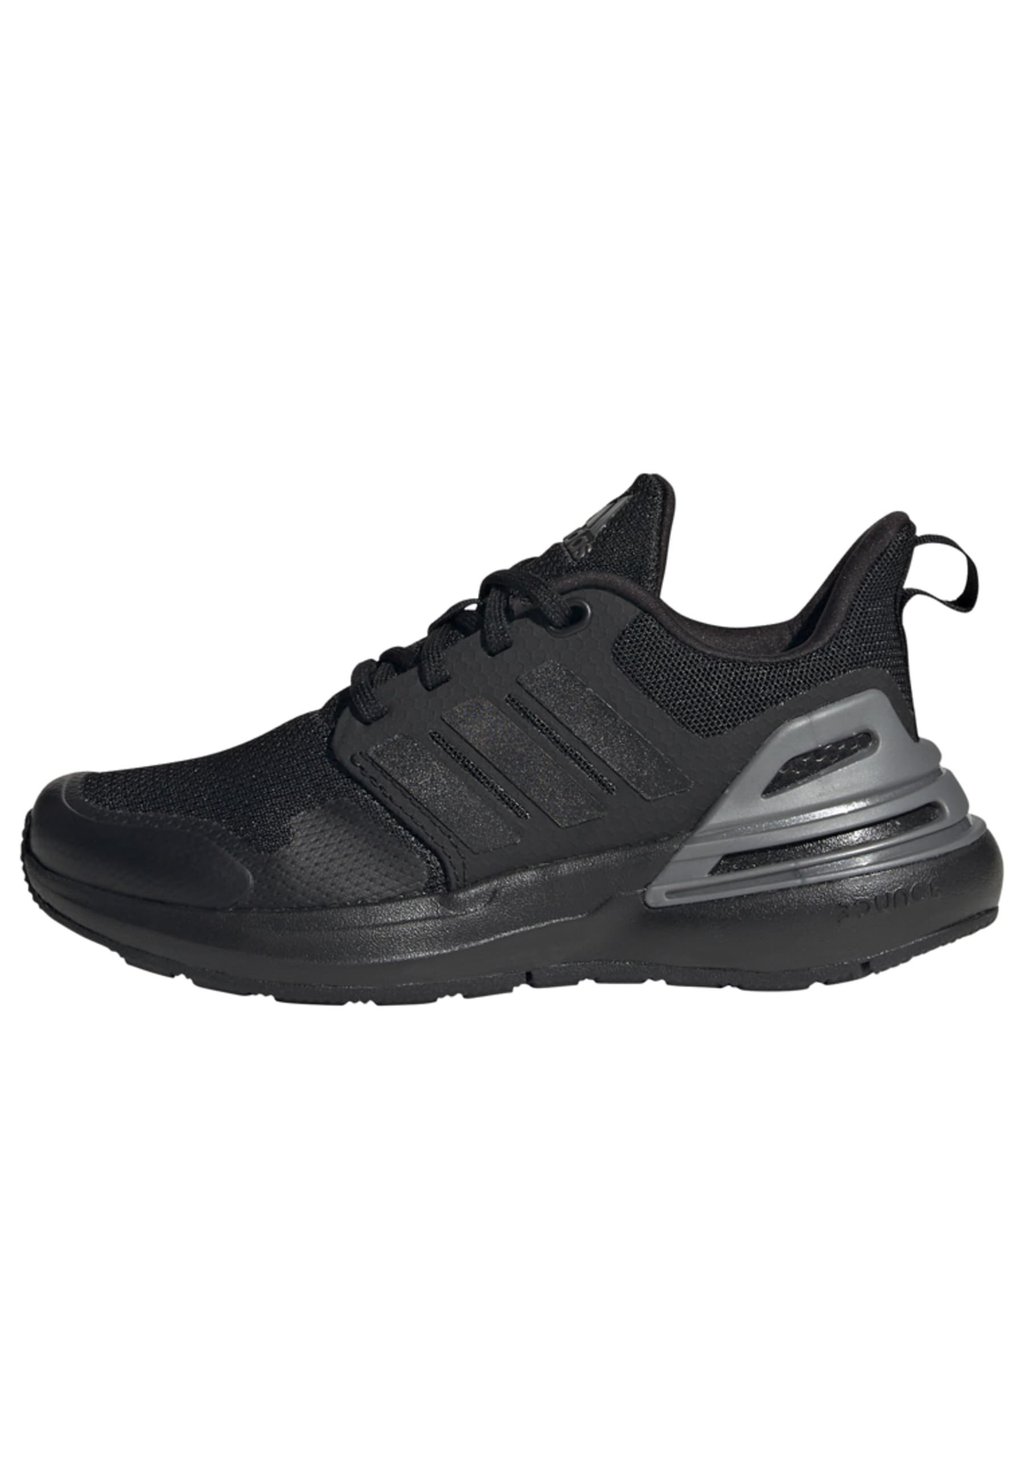 Кроссовки для стабилизирующего бега Rapidasport K Adidas, цвет core black core black iron metallic кроссовки adidas edge lux 5 цвет black black iron metallic